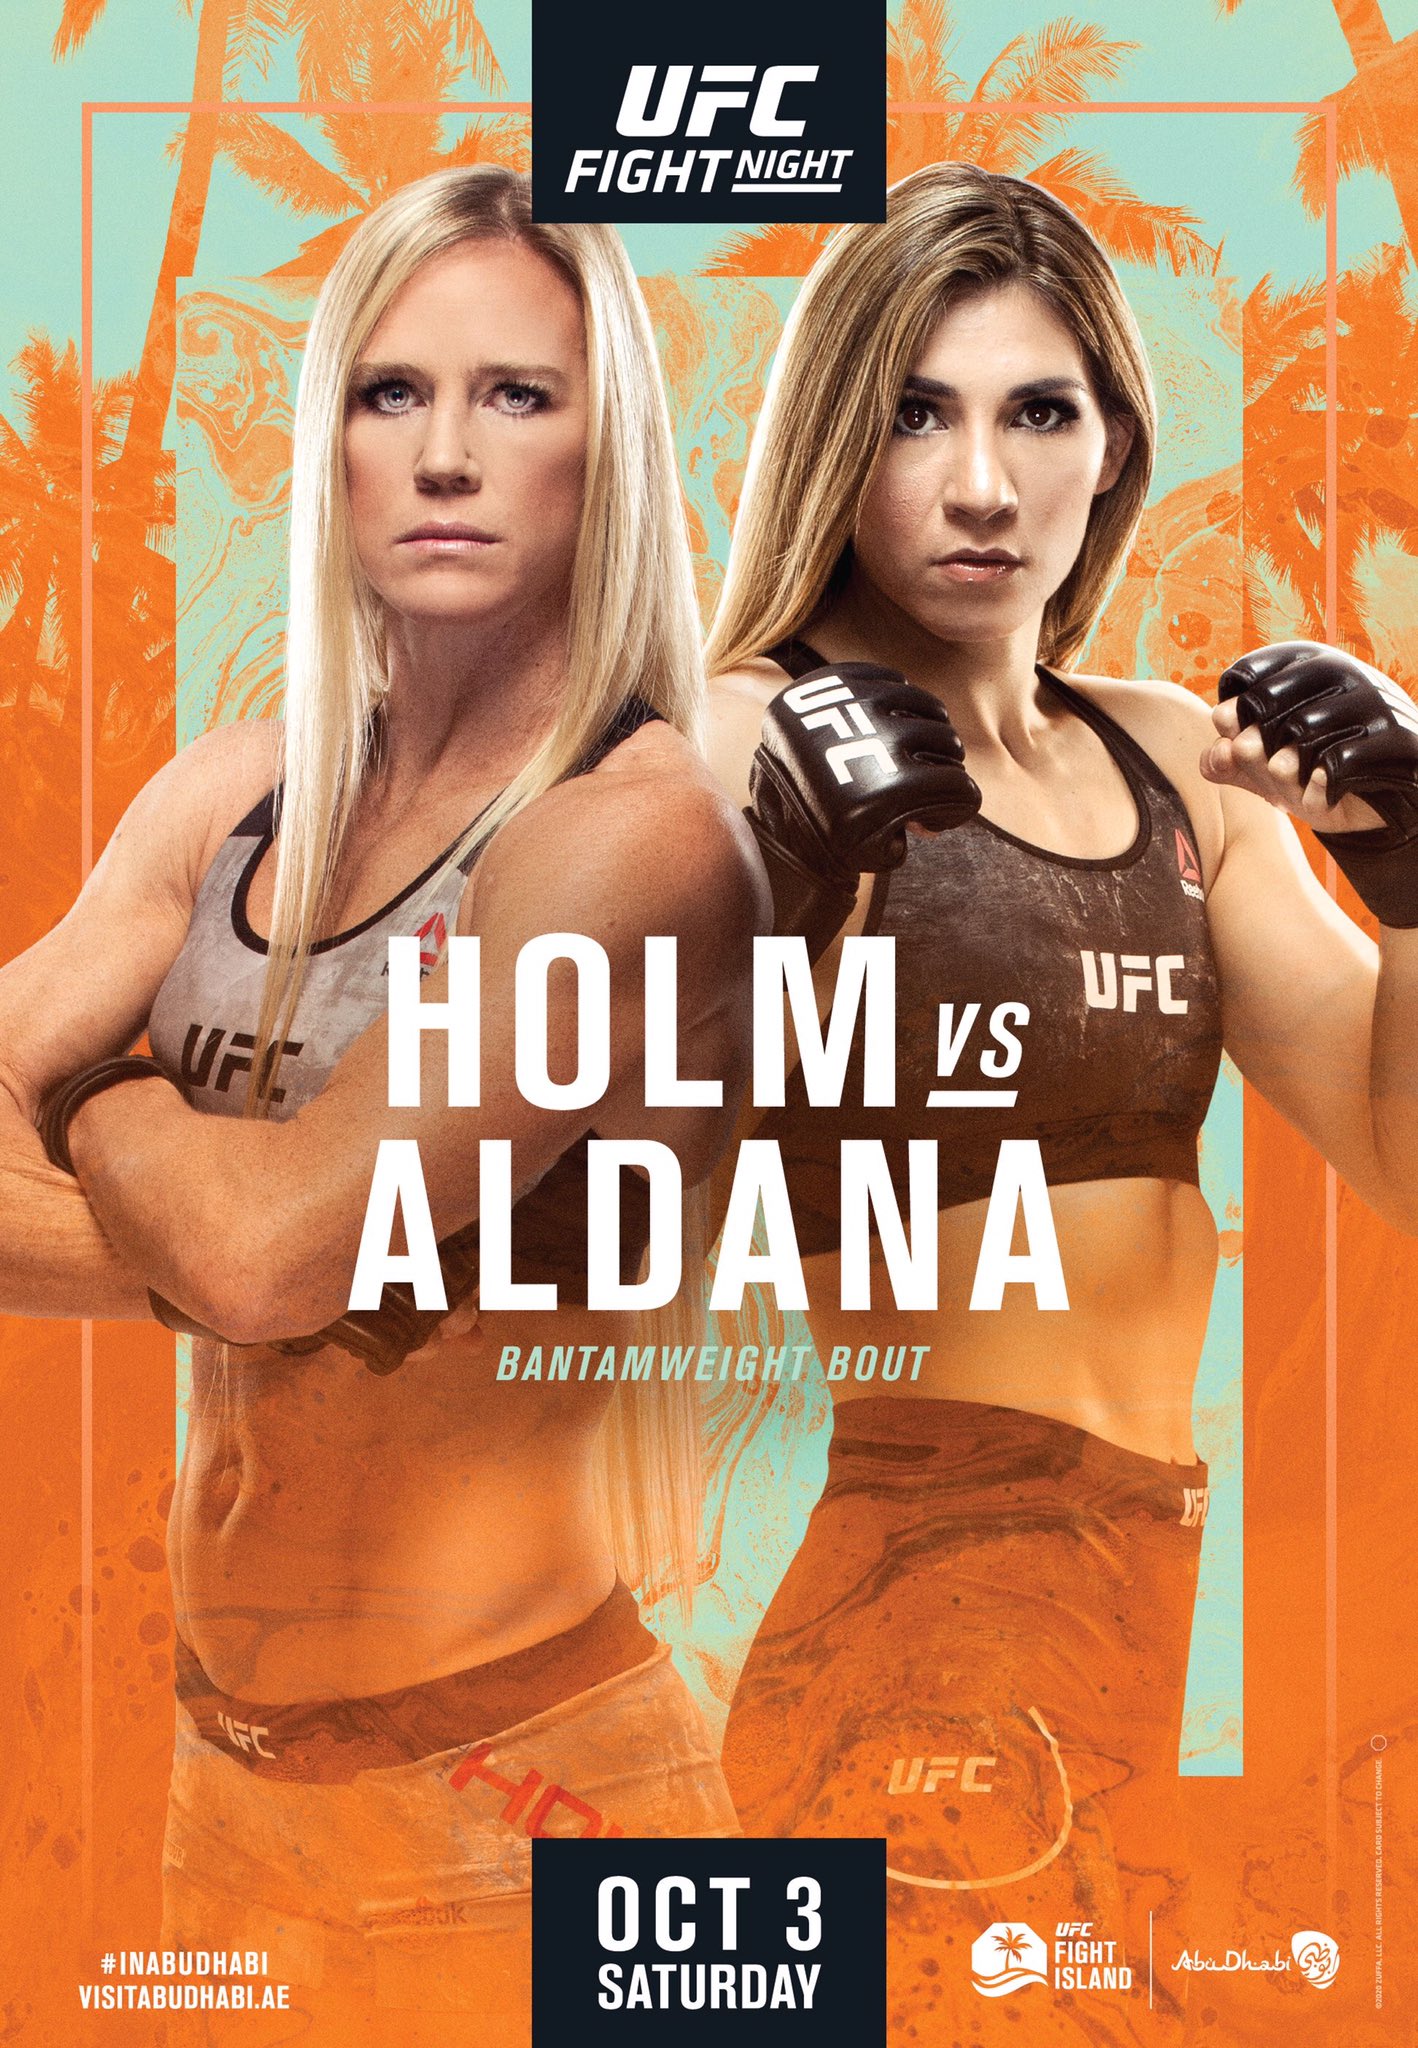 UFC on ESPN 16 - Abu Dhabi - Poster et affiche